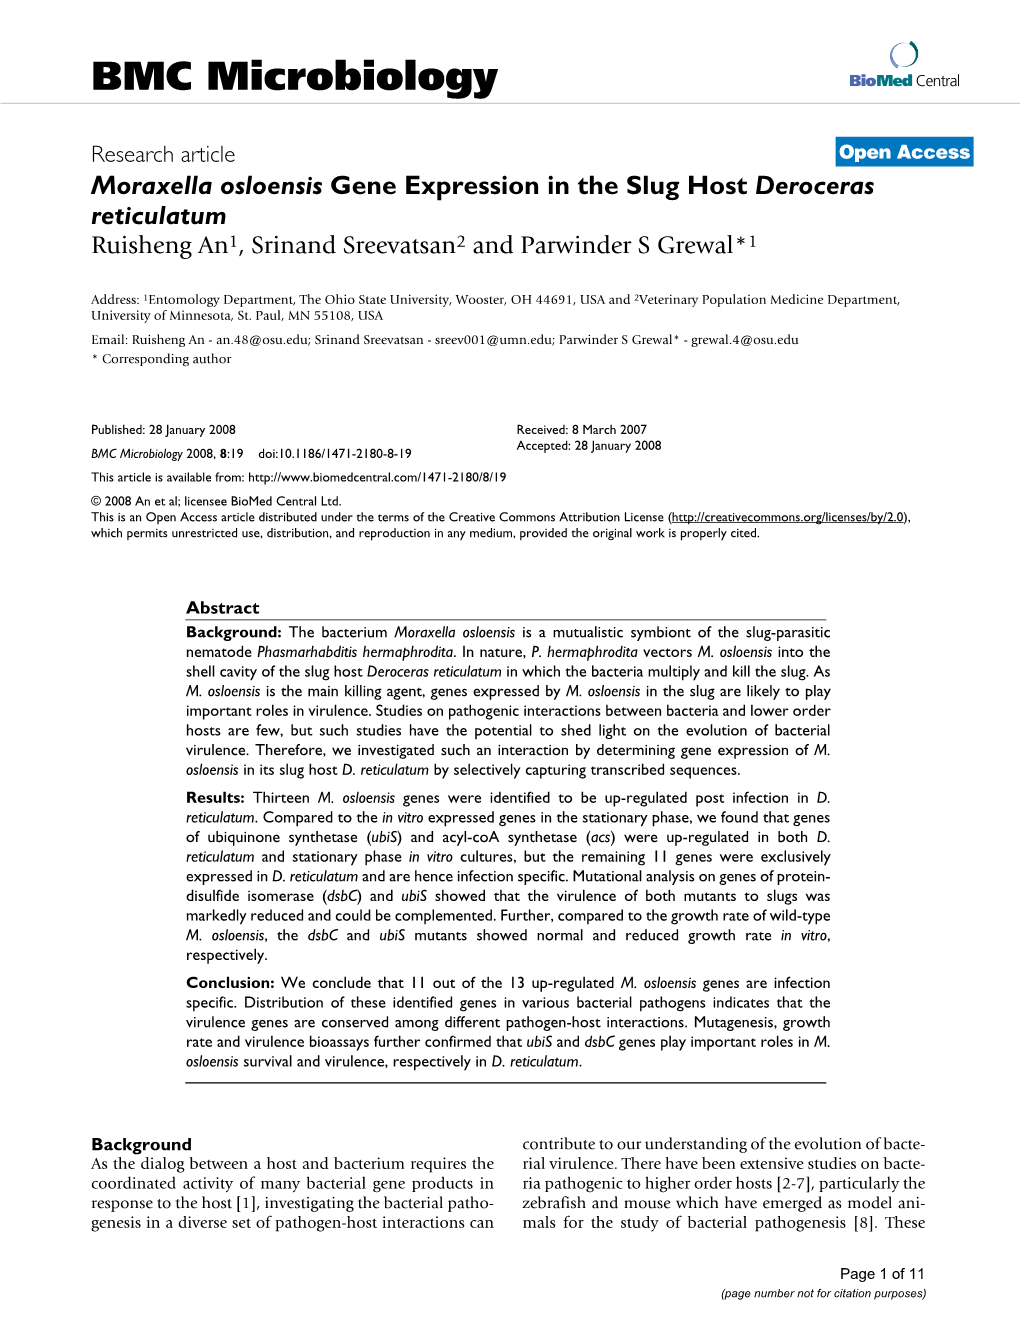 Moraxella Osloensis Gene Expression in the Slug Host Deroceras Reticulatum Ruisheng An1, Srinand Sreevatsan2 and Parwinder S Grewal*1